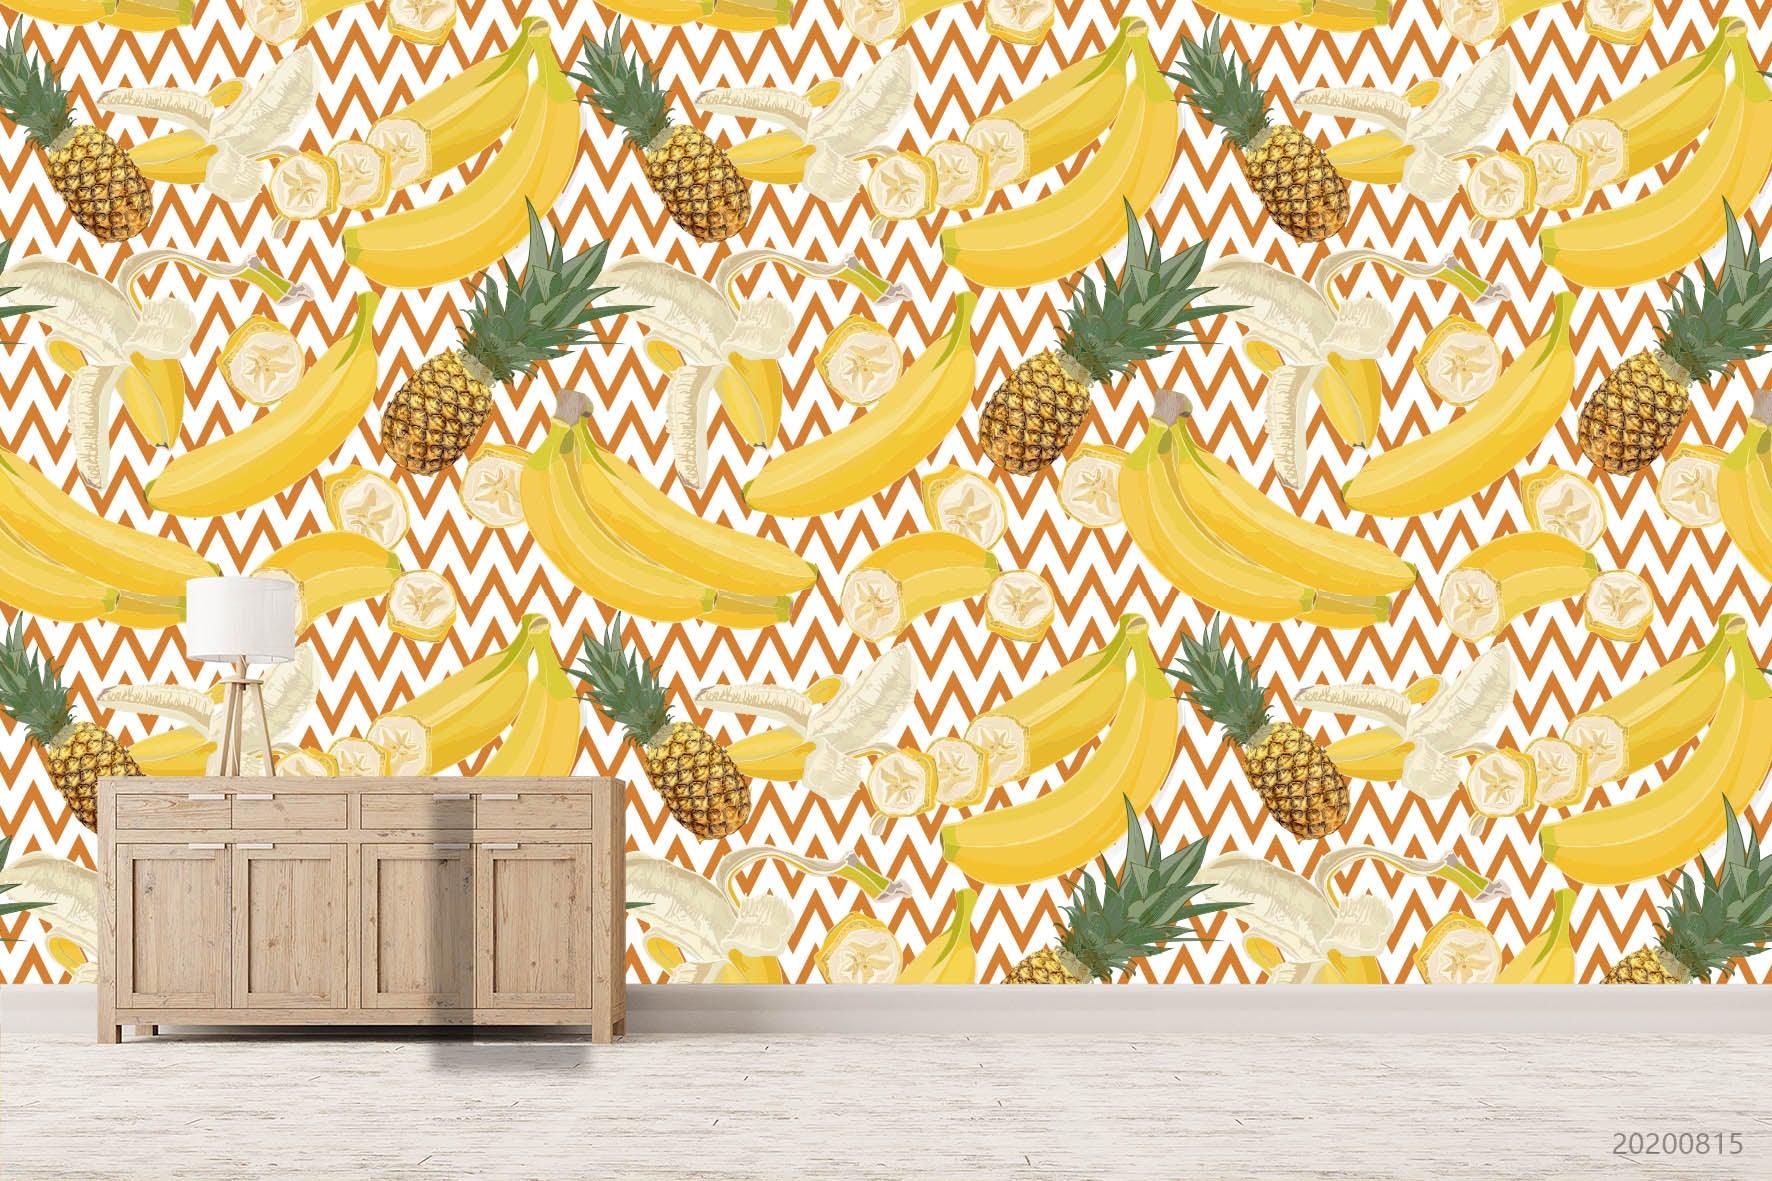 3D Cartoon Banana Pineapple Fruity Geometric Wall Mural Wallpaper LXL 1040- Jess Art Decoration